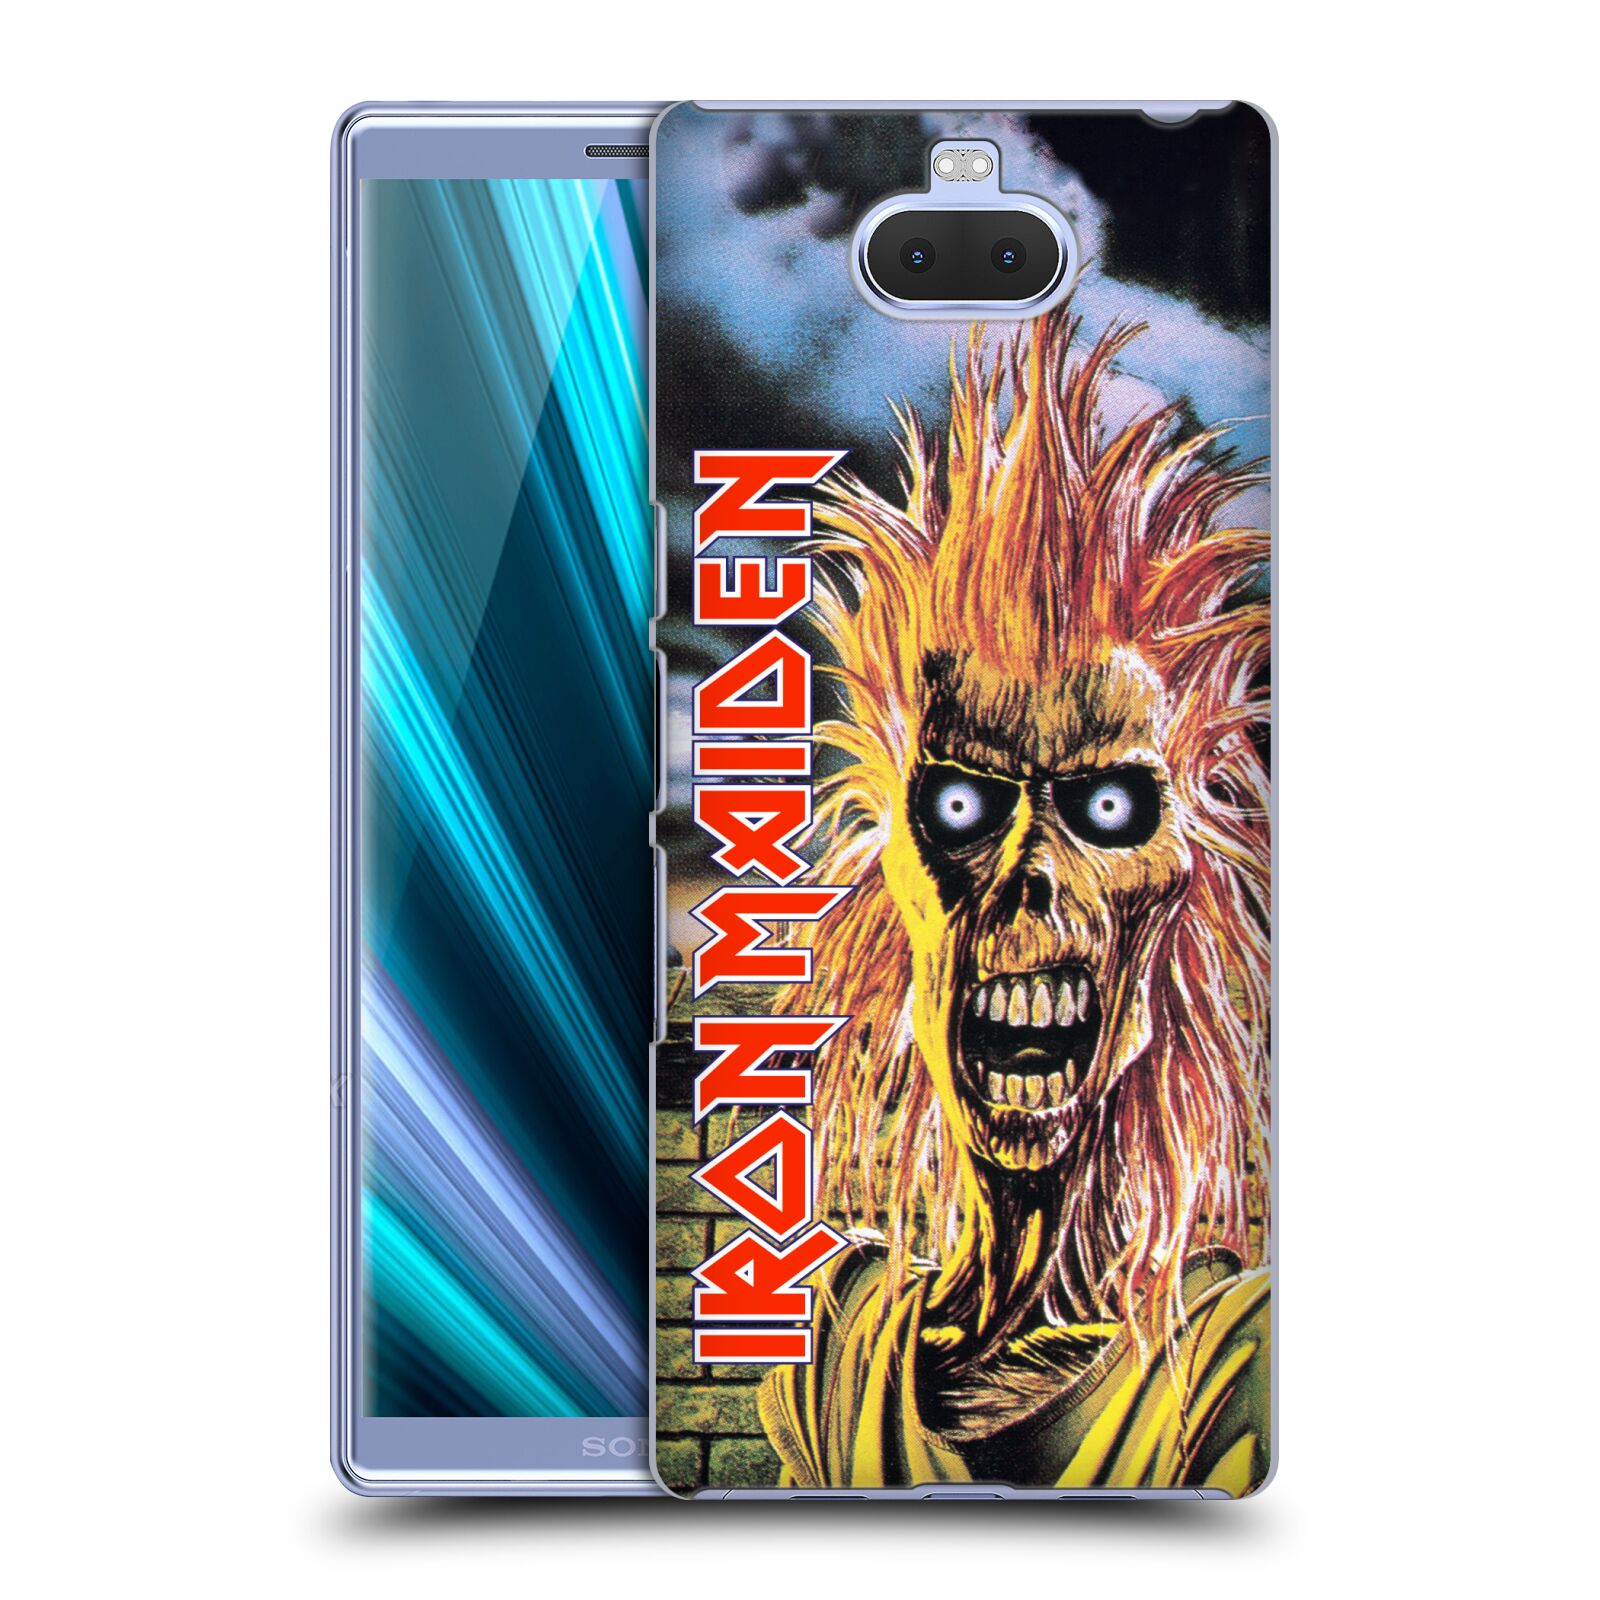 Pouzdro na mobil Sony Xperia 10 - Head Case - Heavymetalová skupina Iron Maiden punker